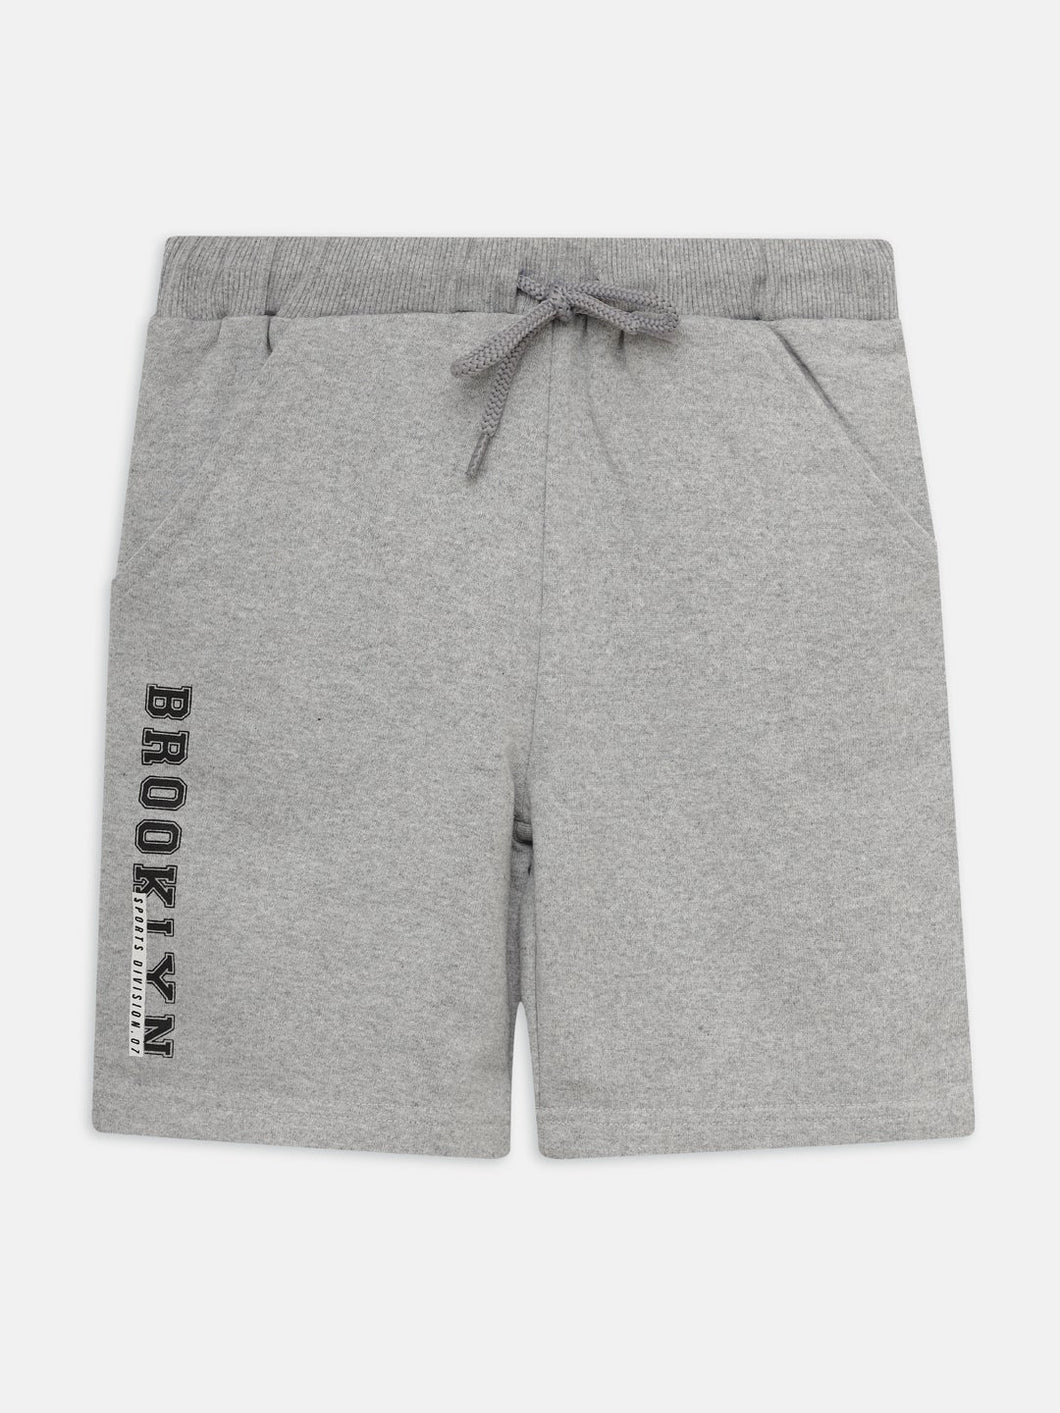 Boys Shorts (Style-OTB211106) Grey